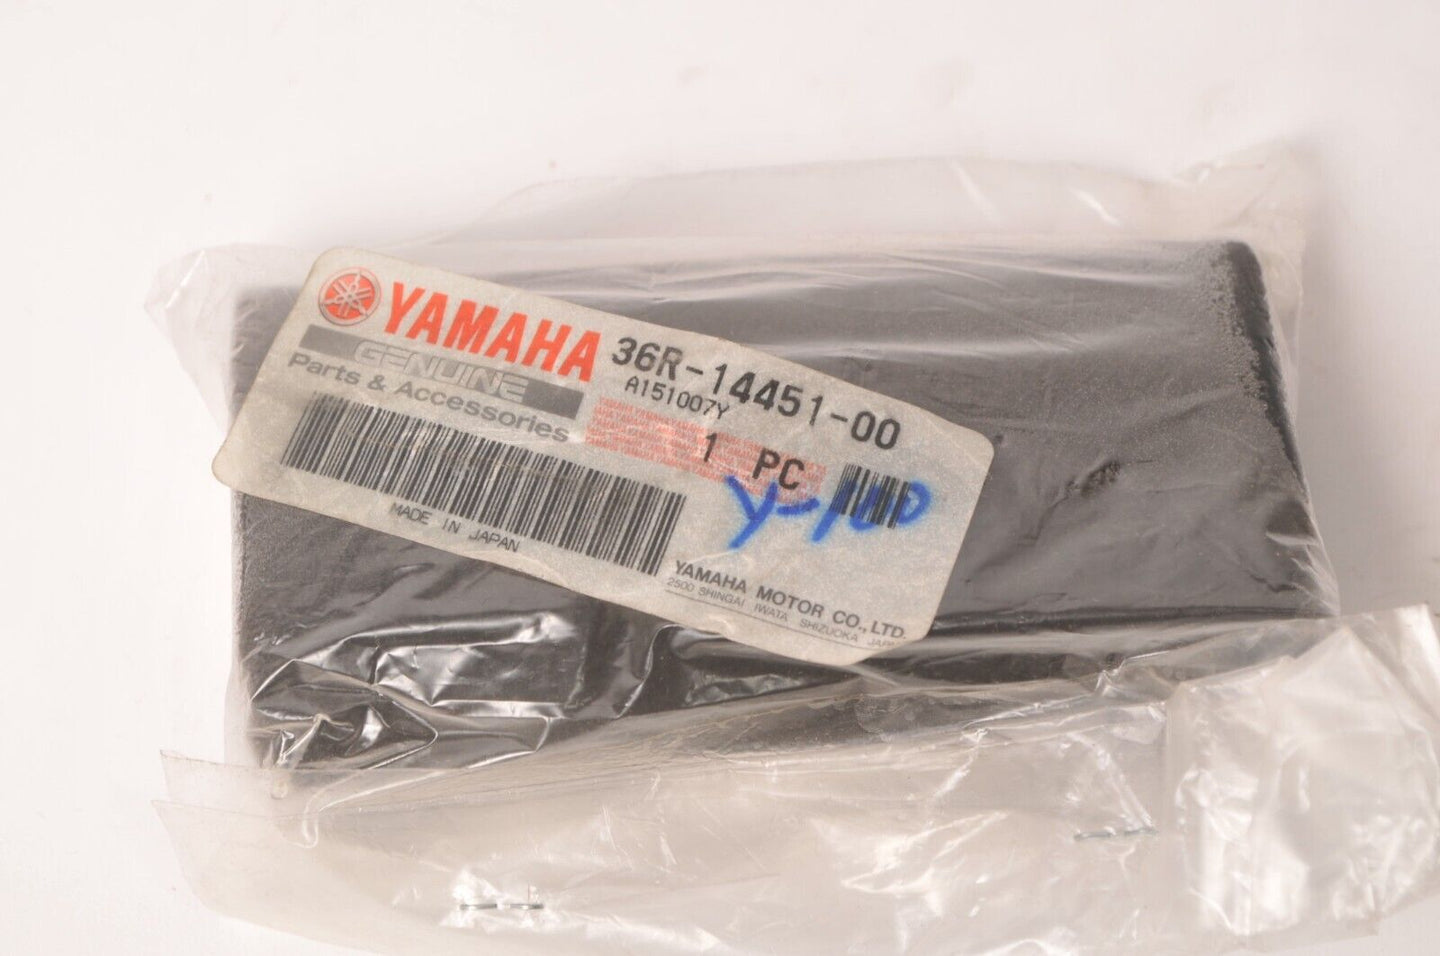 Genuine Yamaha Air Filter Element - Tri-Zinger YT60 4-Zinger YF60 | 36R-14451-00